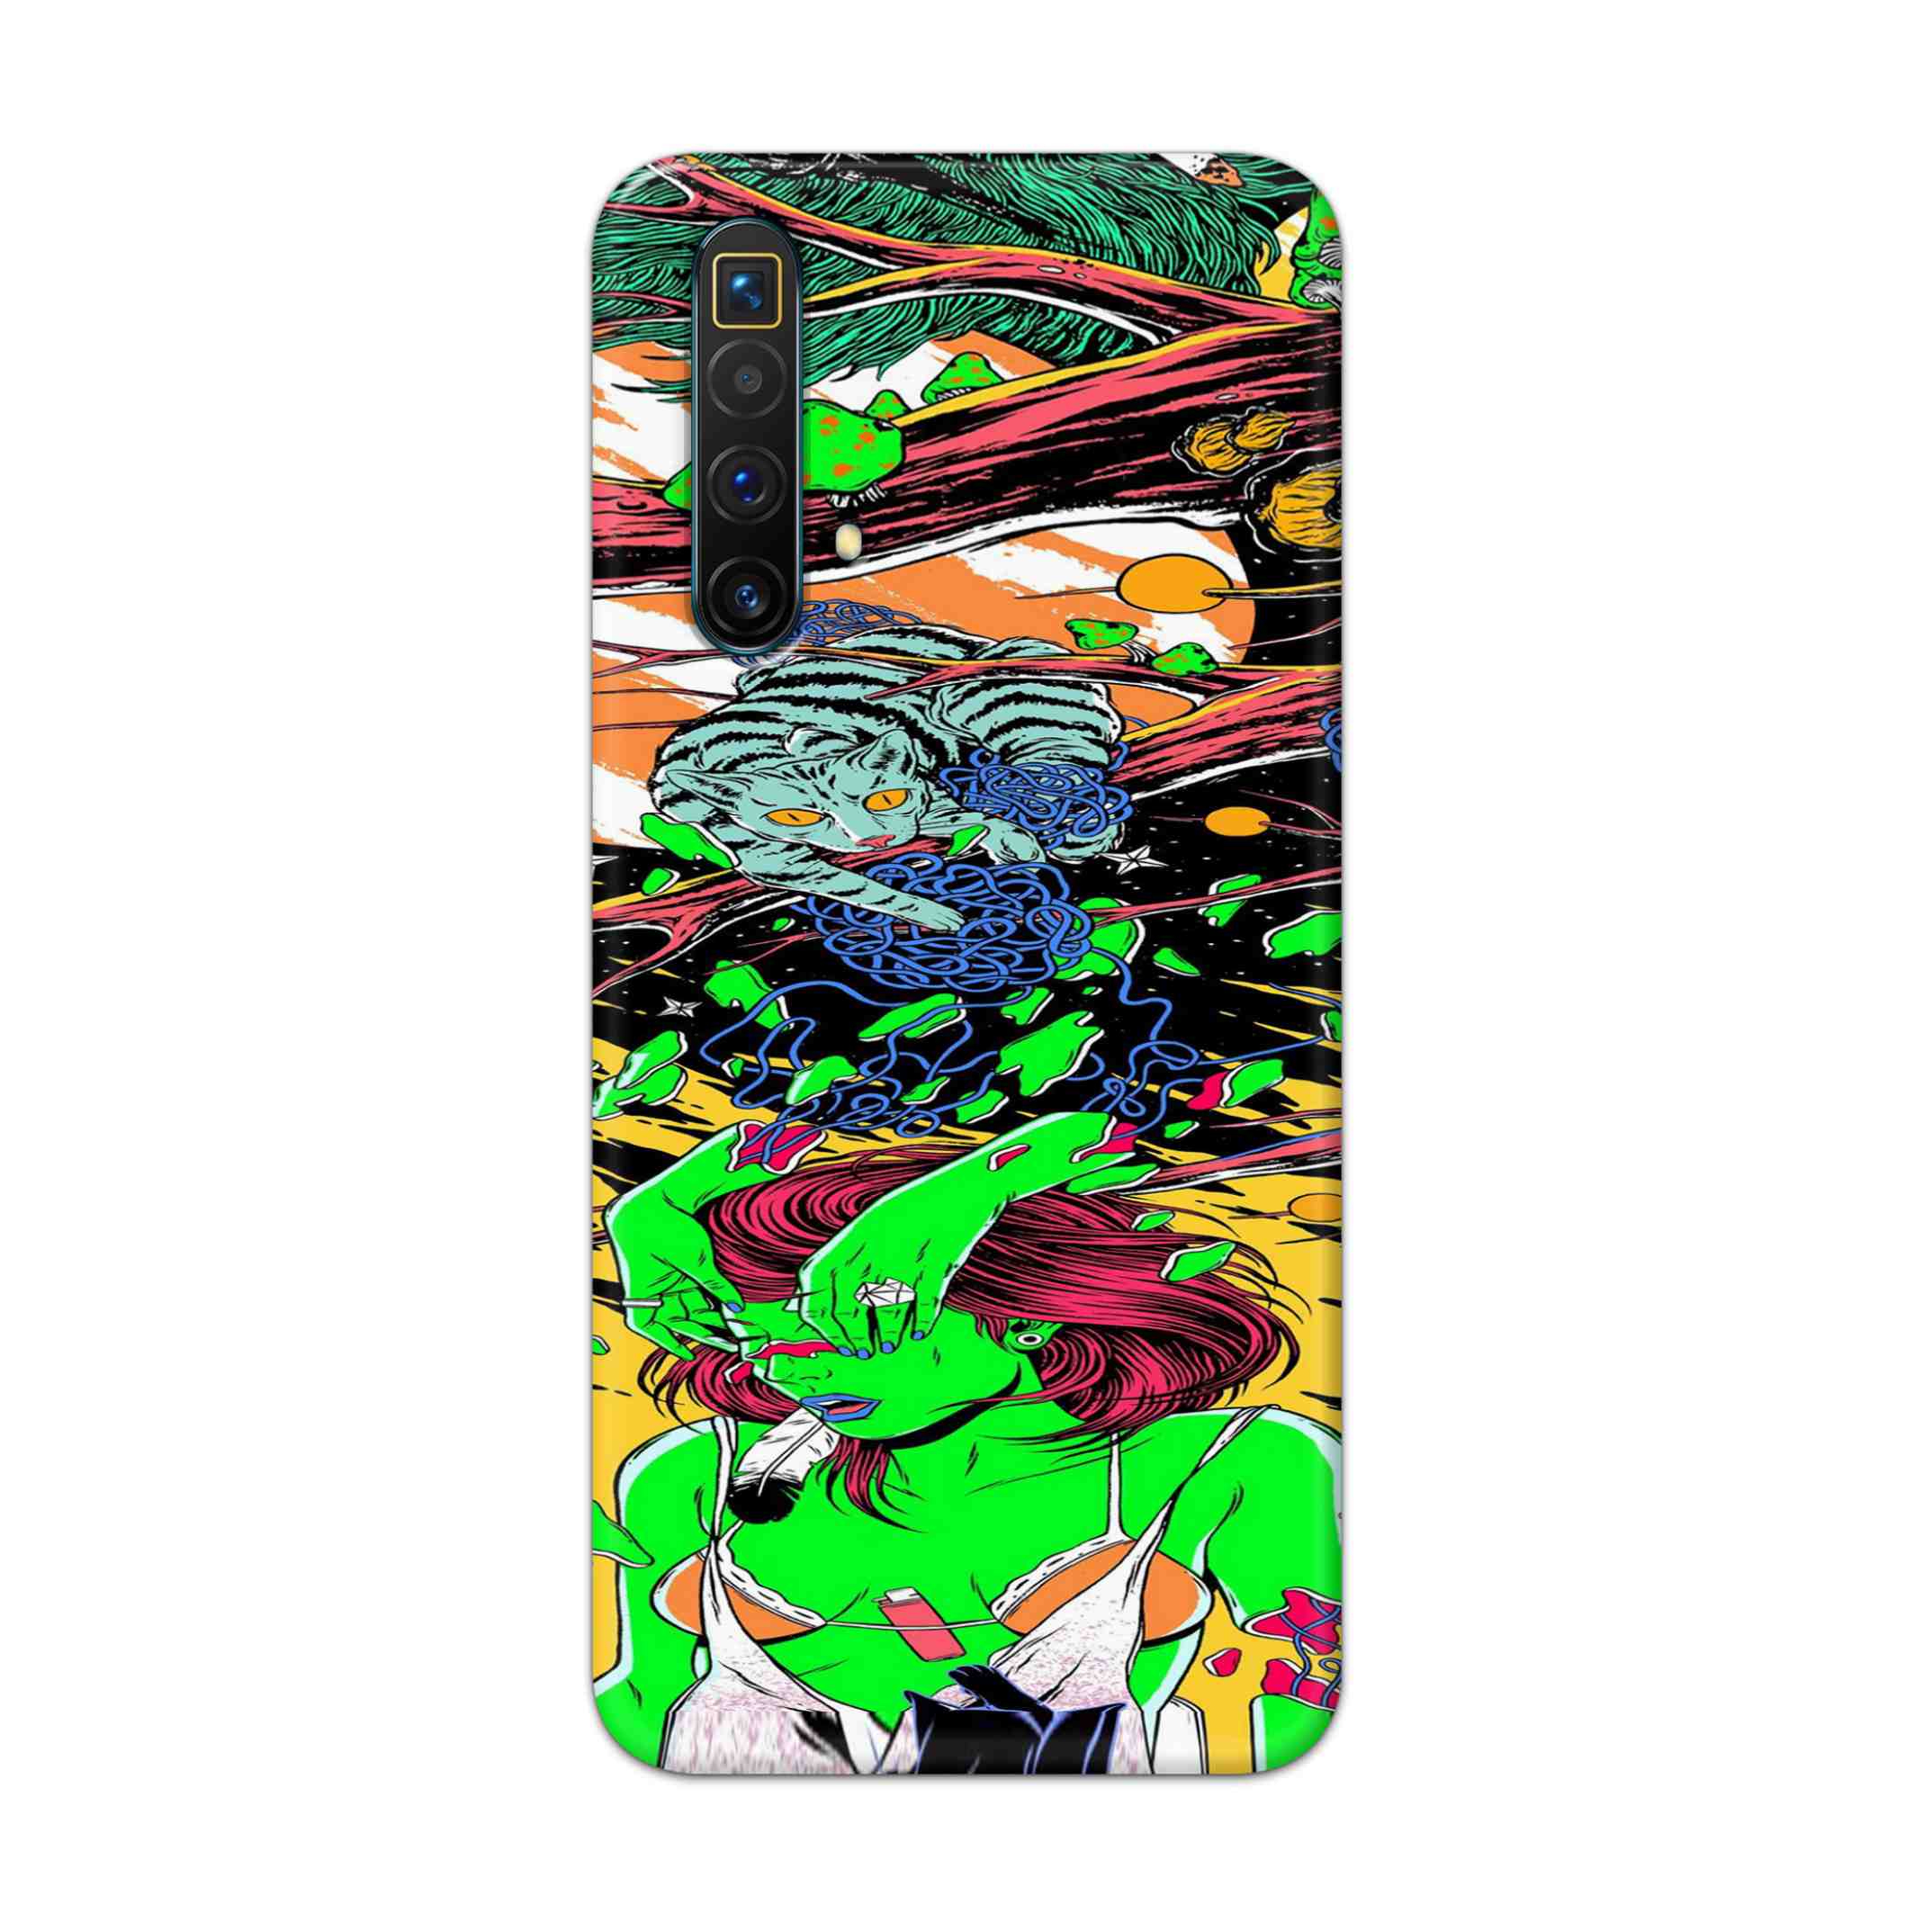 Buy Green Girl Art Hard Back Mobile Phone Case Cover For Realme X3 Superzoom Online